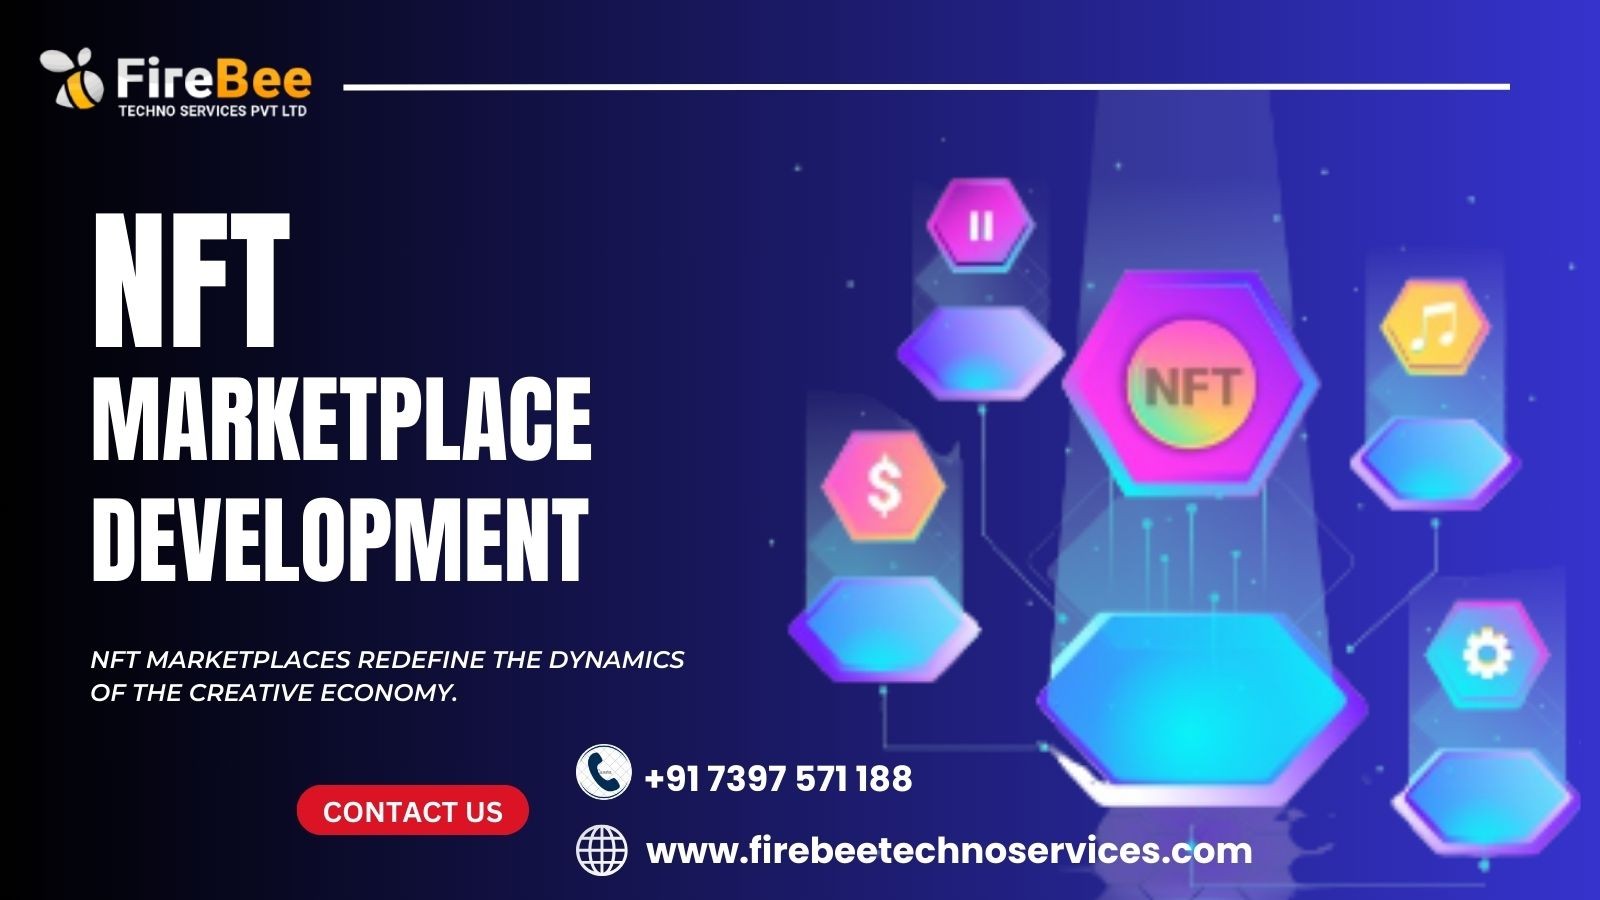 NFT marketplace development company - Firebee Techno Services